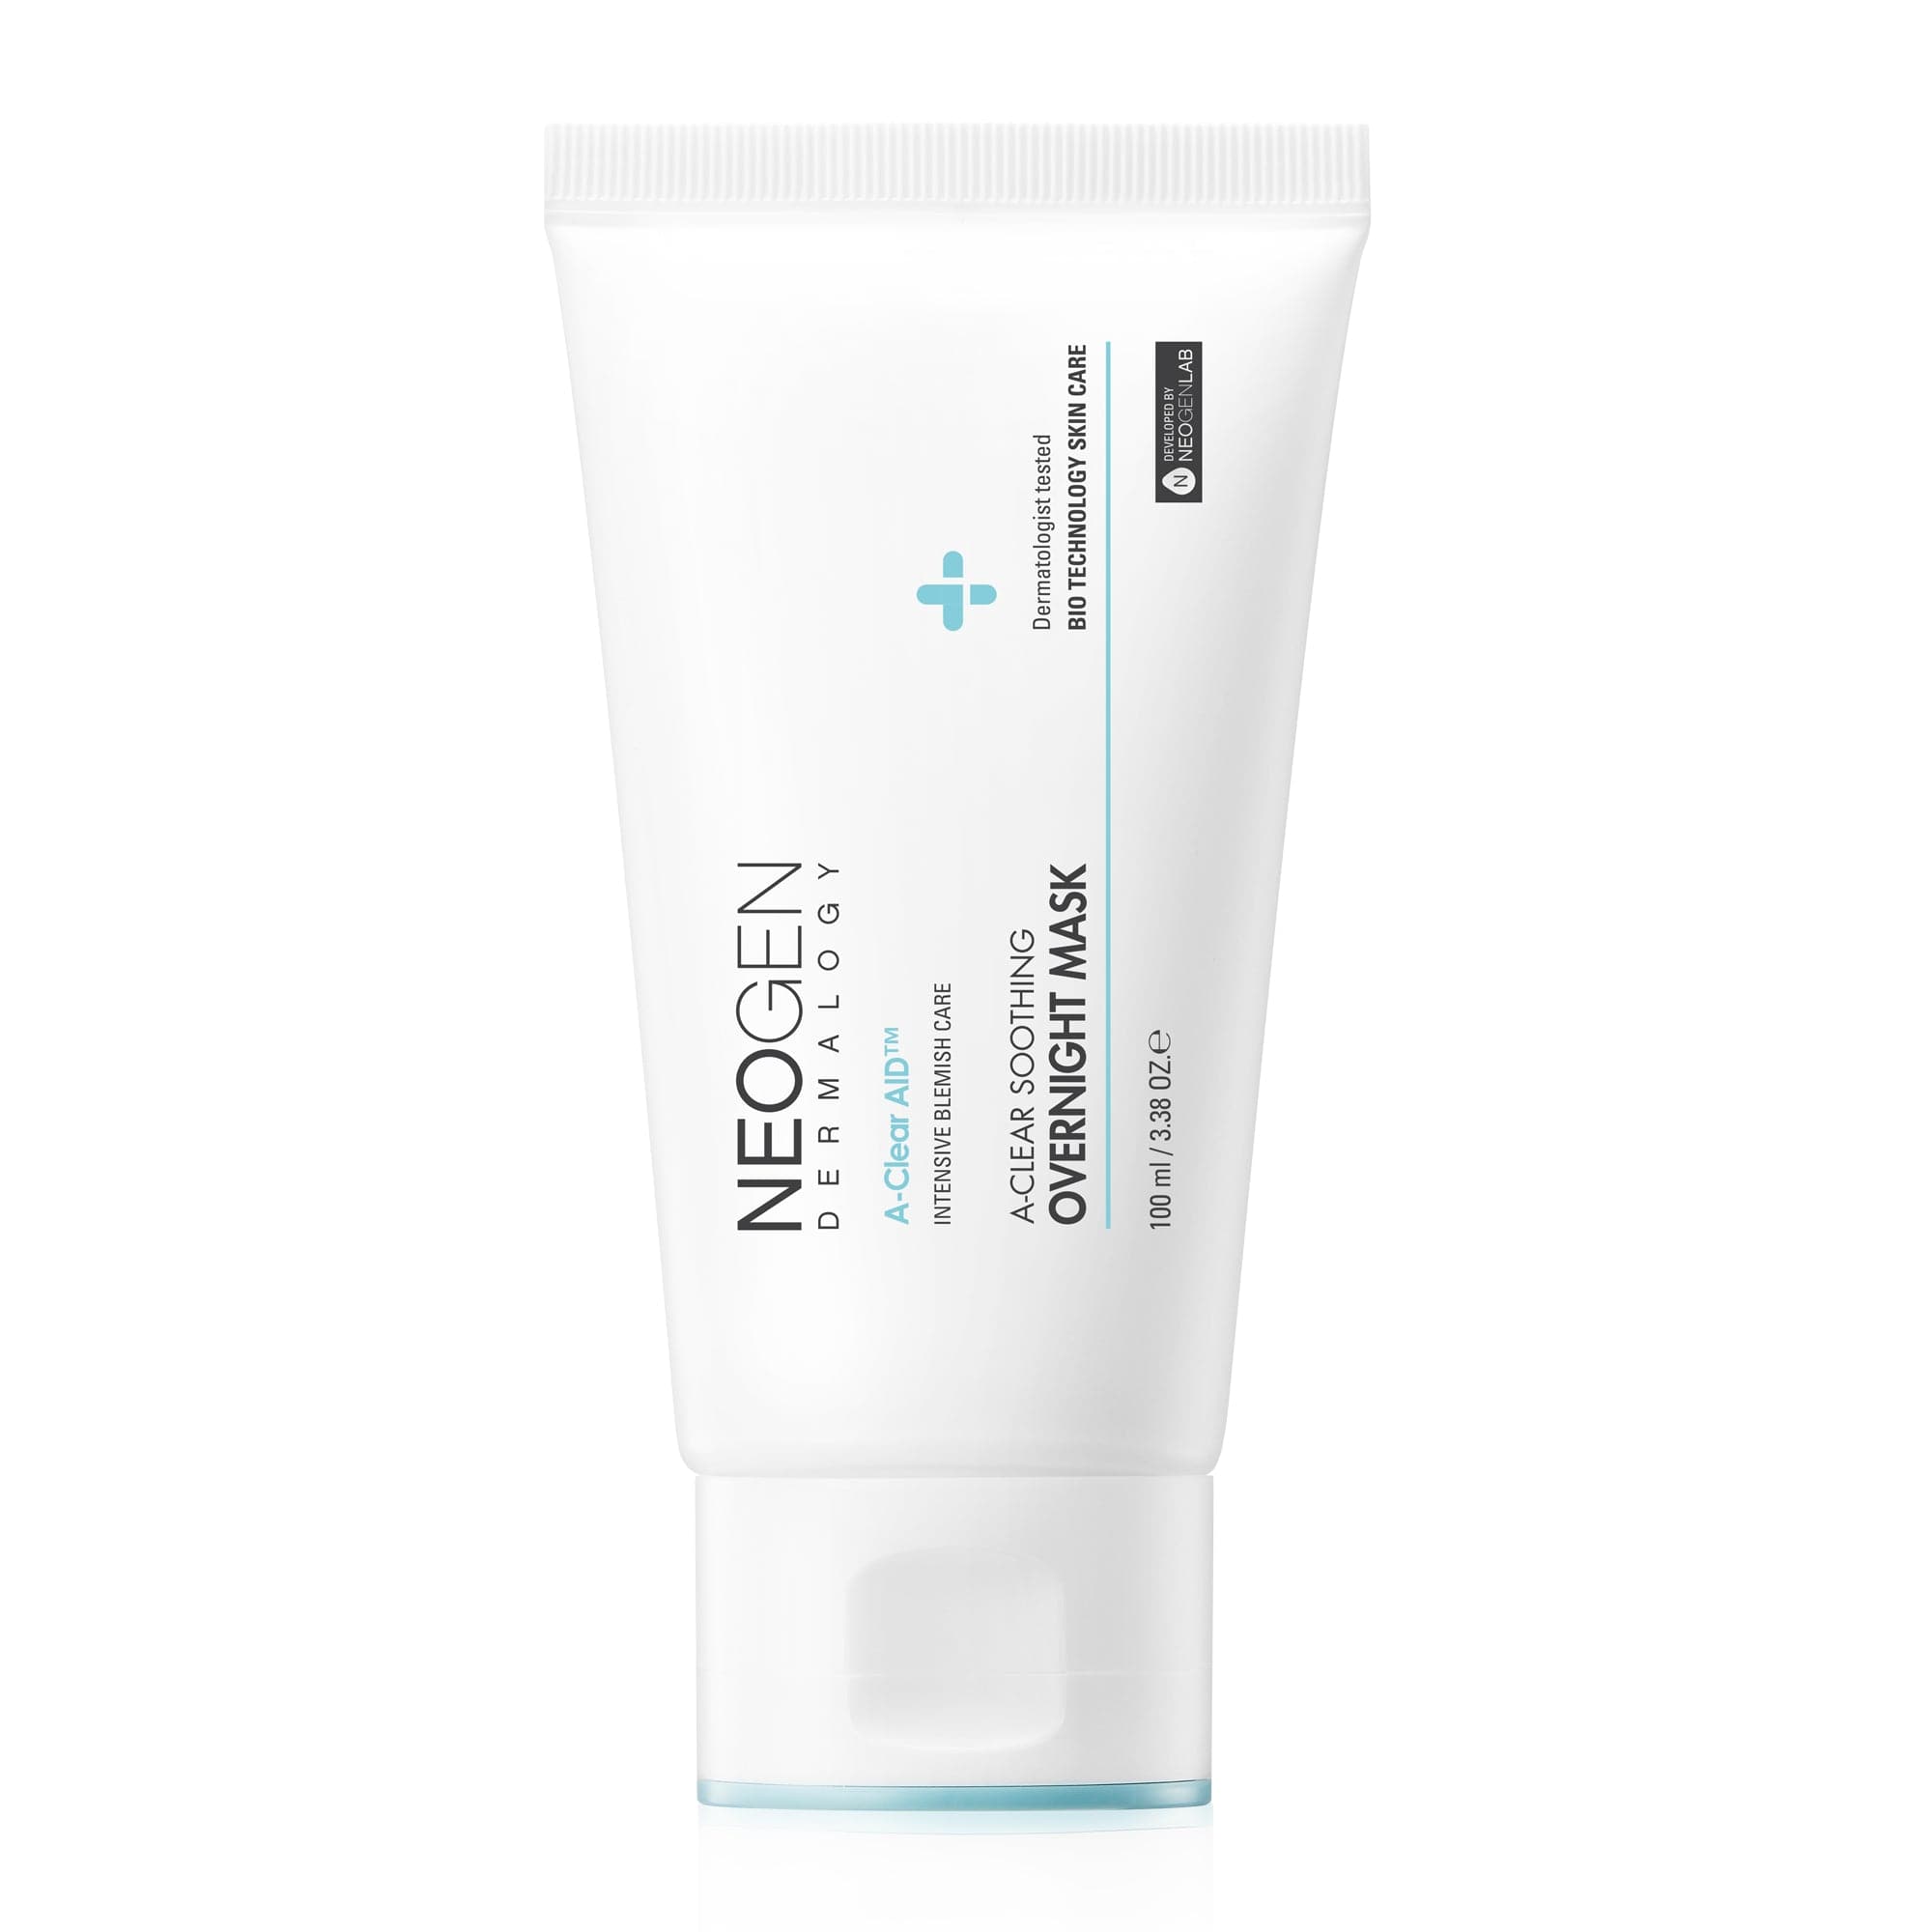 ACNE SAVIOR (A-clear acne foam cleanser, soothing foam cleanser, toner, serum, spot patch, pink eraser,overnight mask)